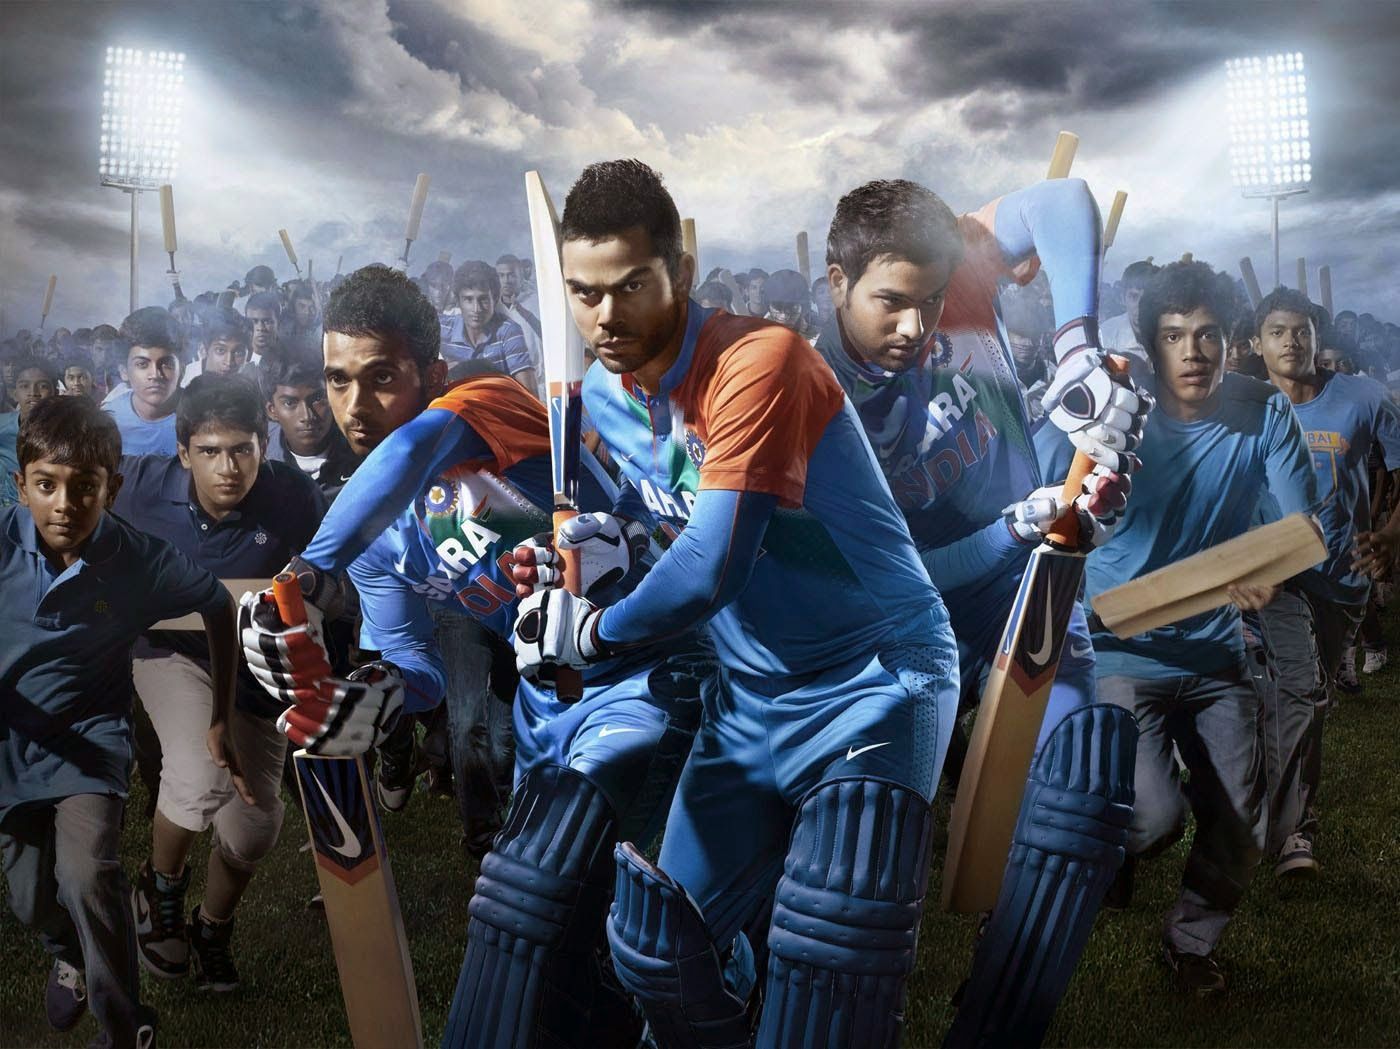 Indian Cricket Team Logo Wallpapers